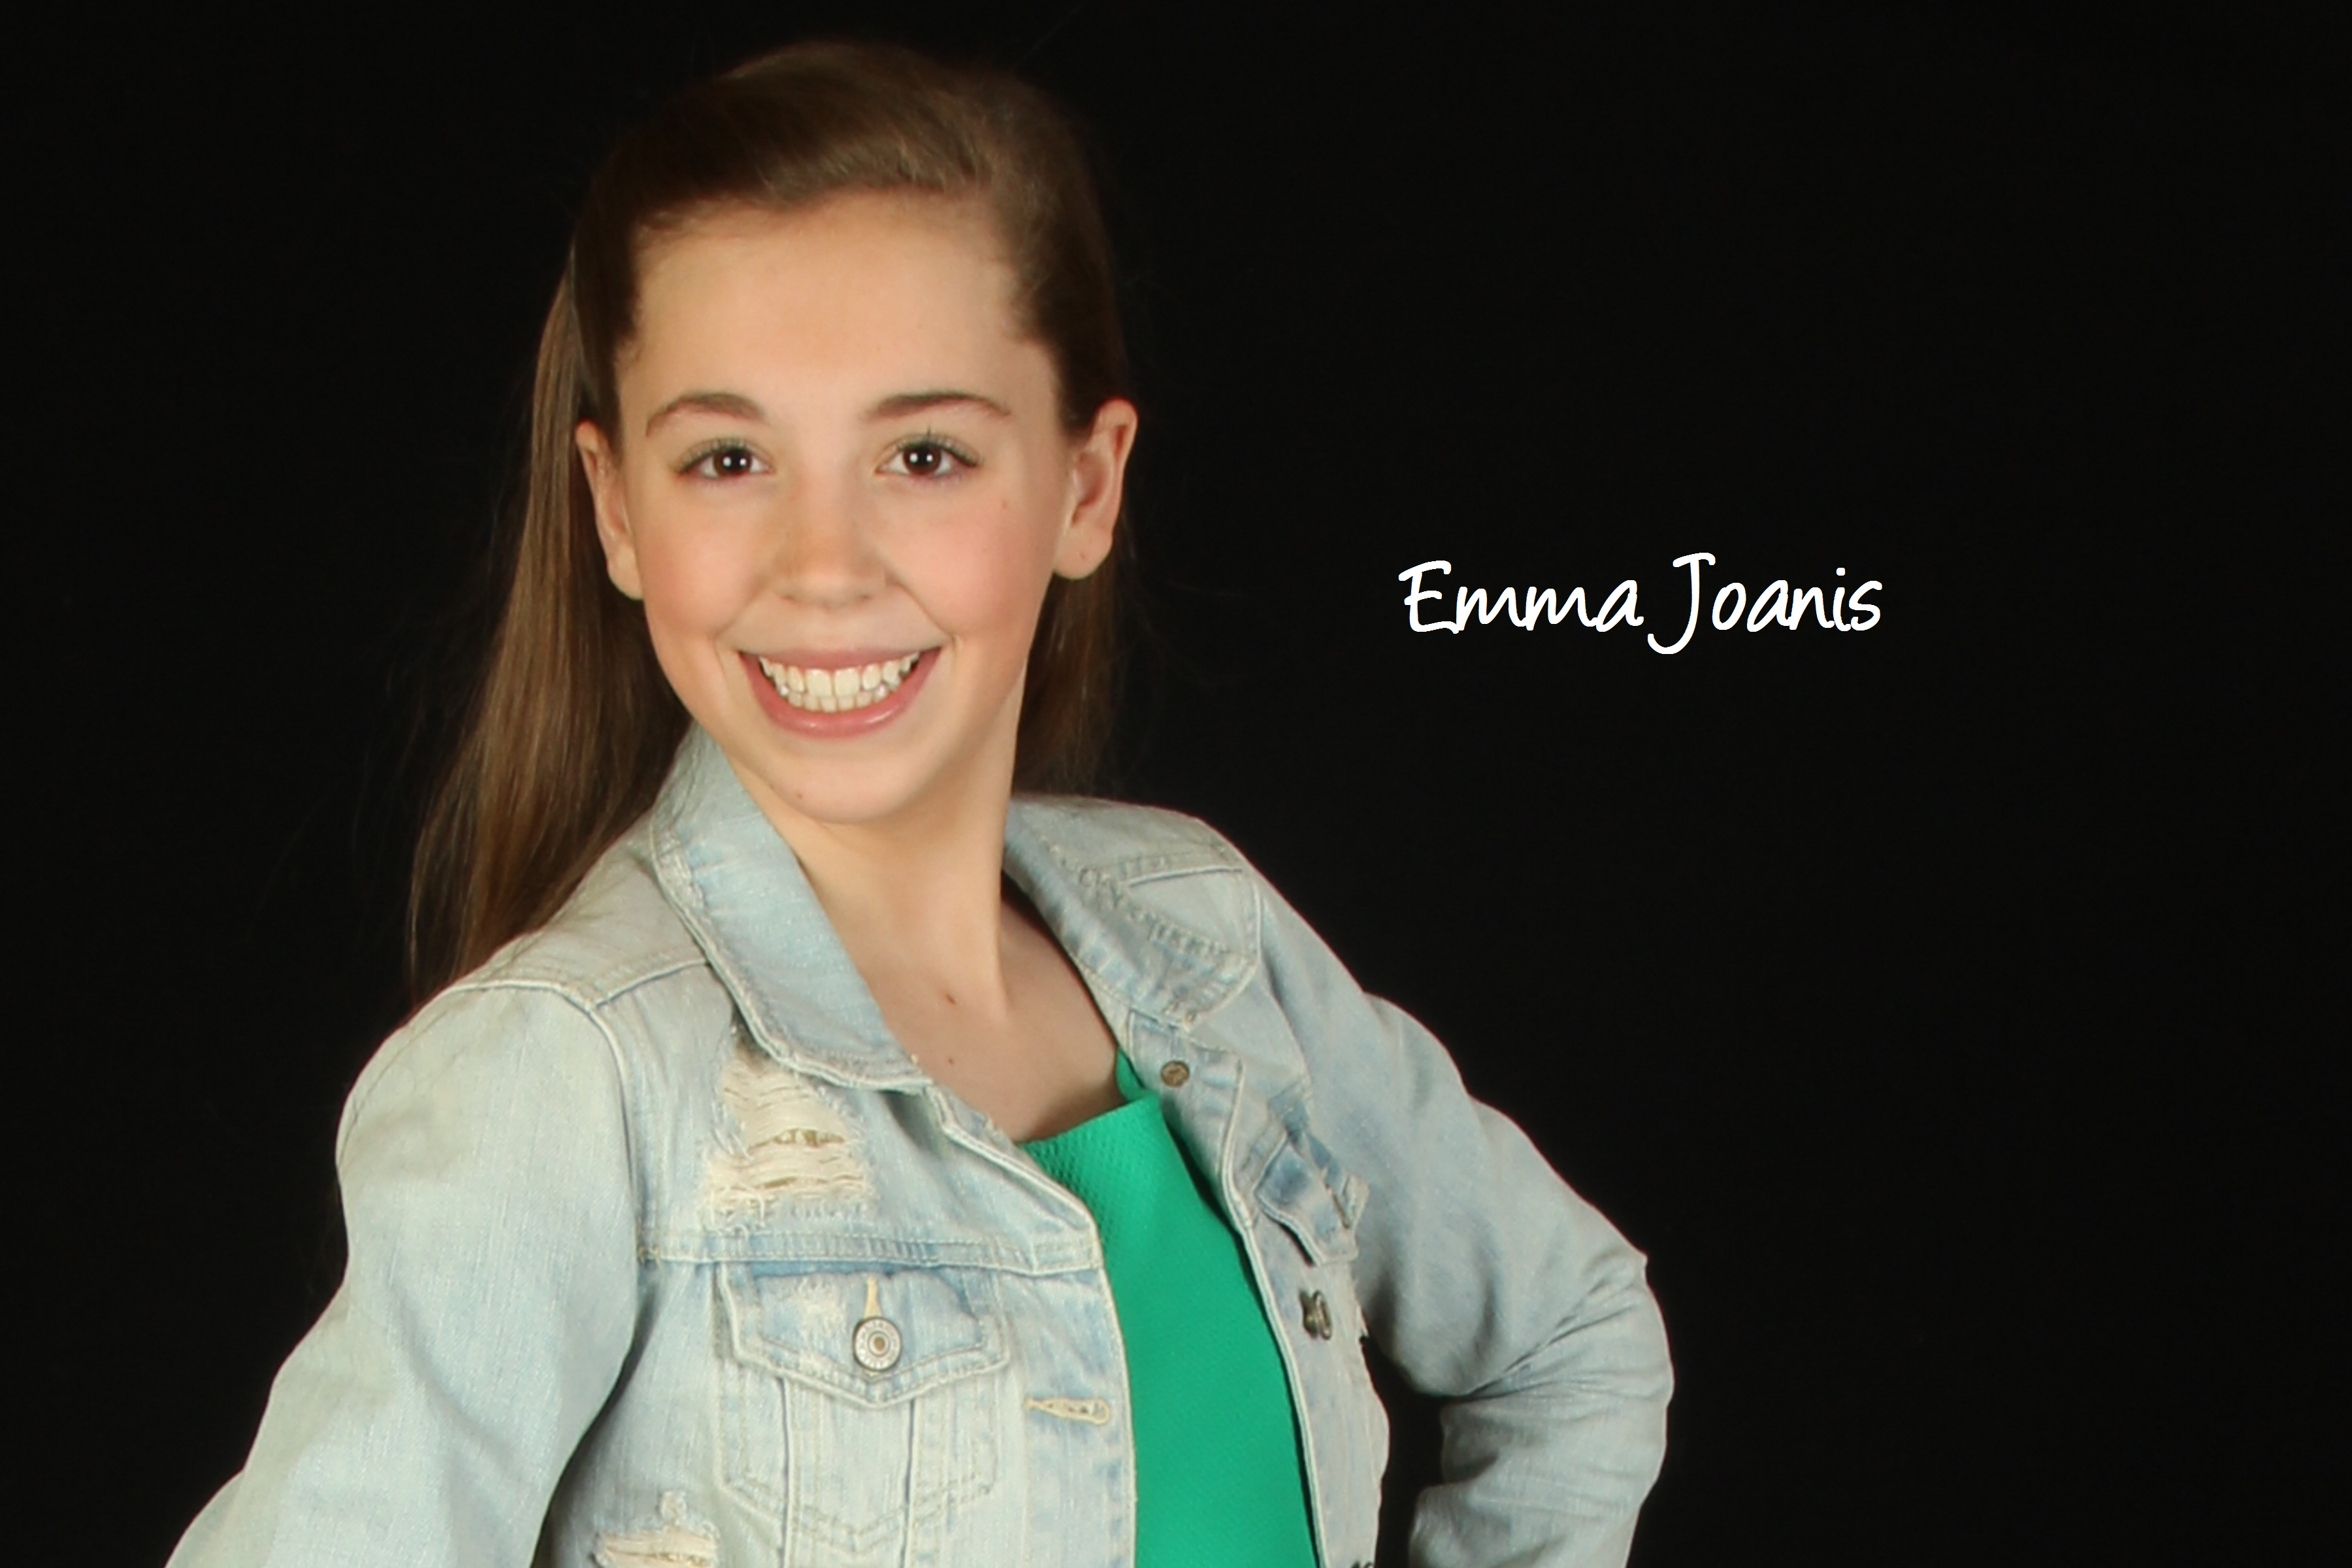 Emma Joanis